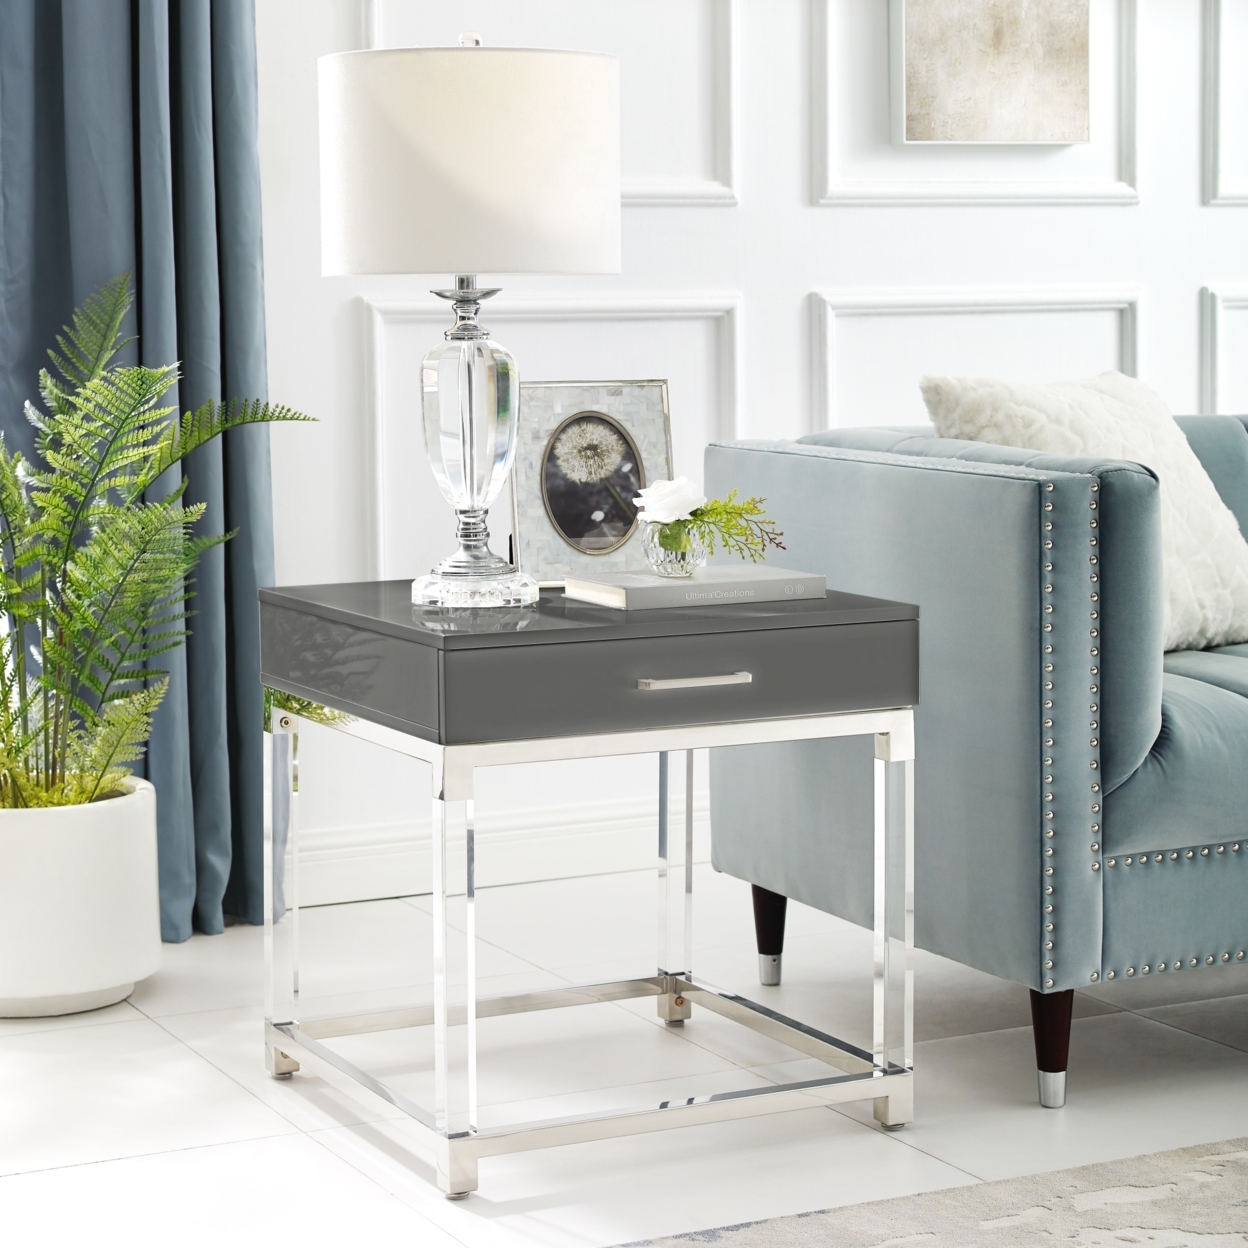 Jerome End Table-High Gloss-Acrylic Legs-Metal Base-Modern Design - White/Chrome